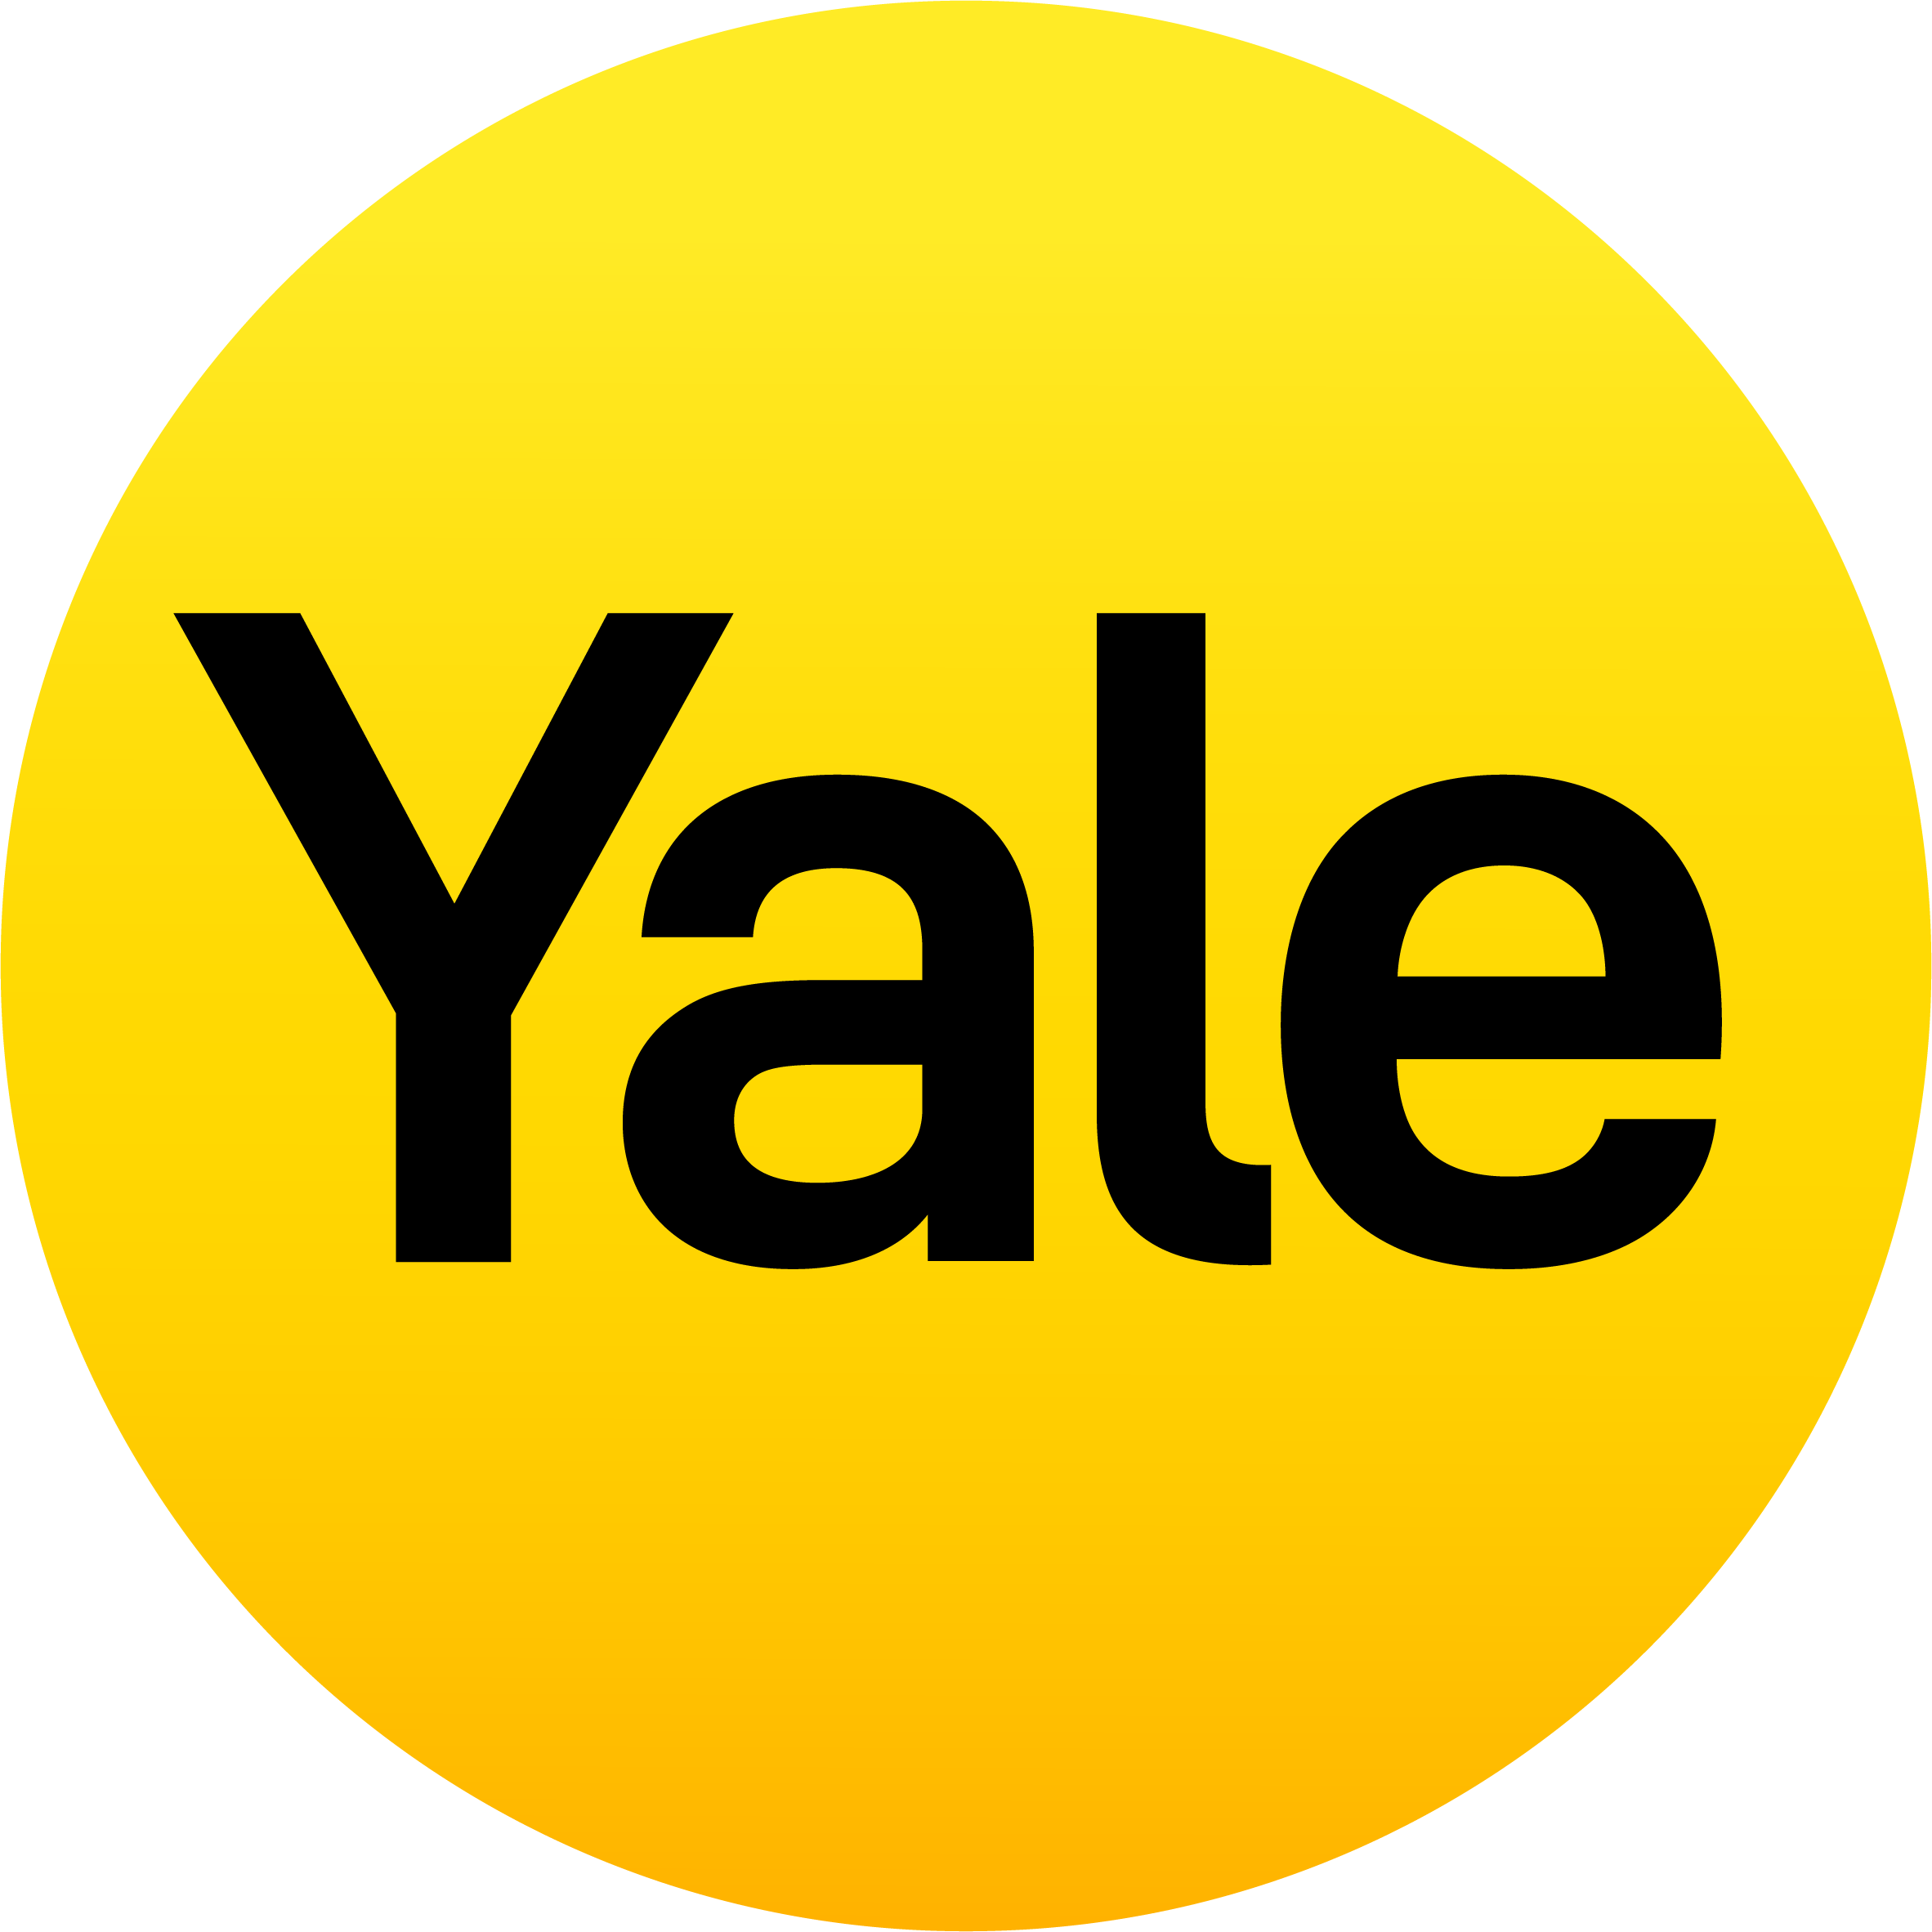 Yale Security